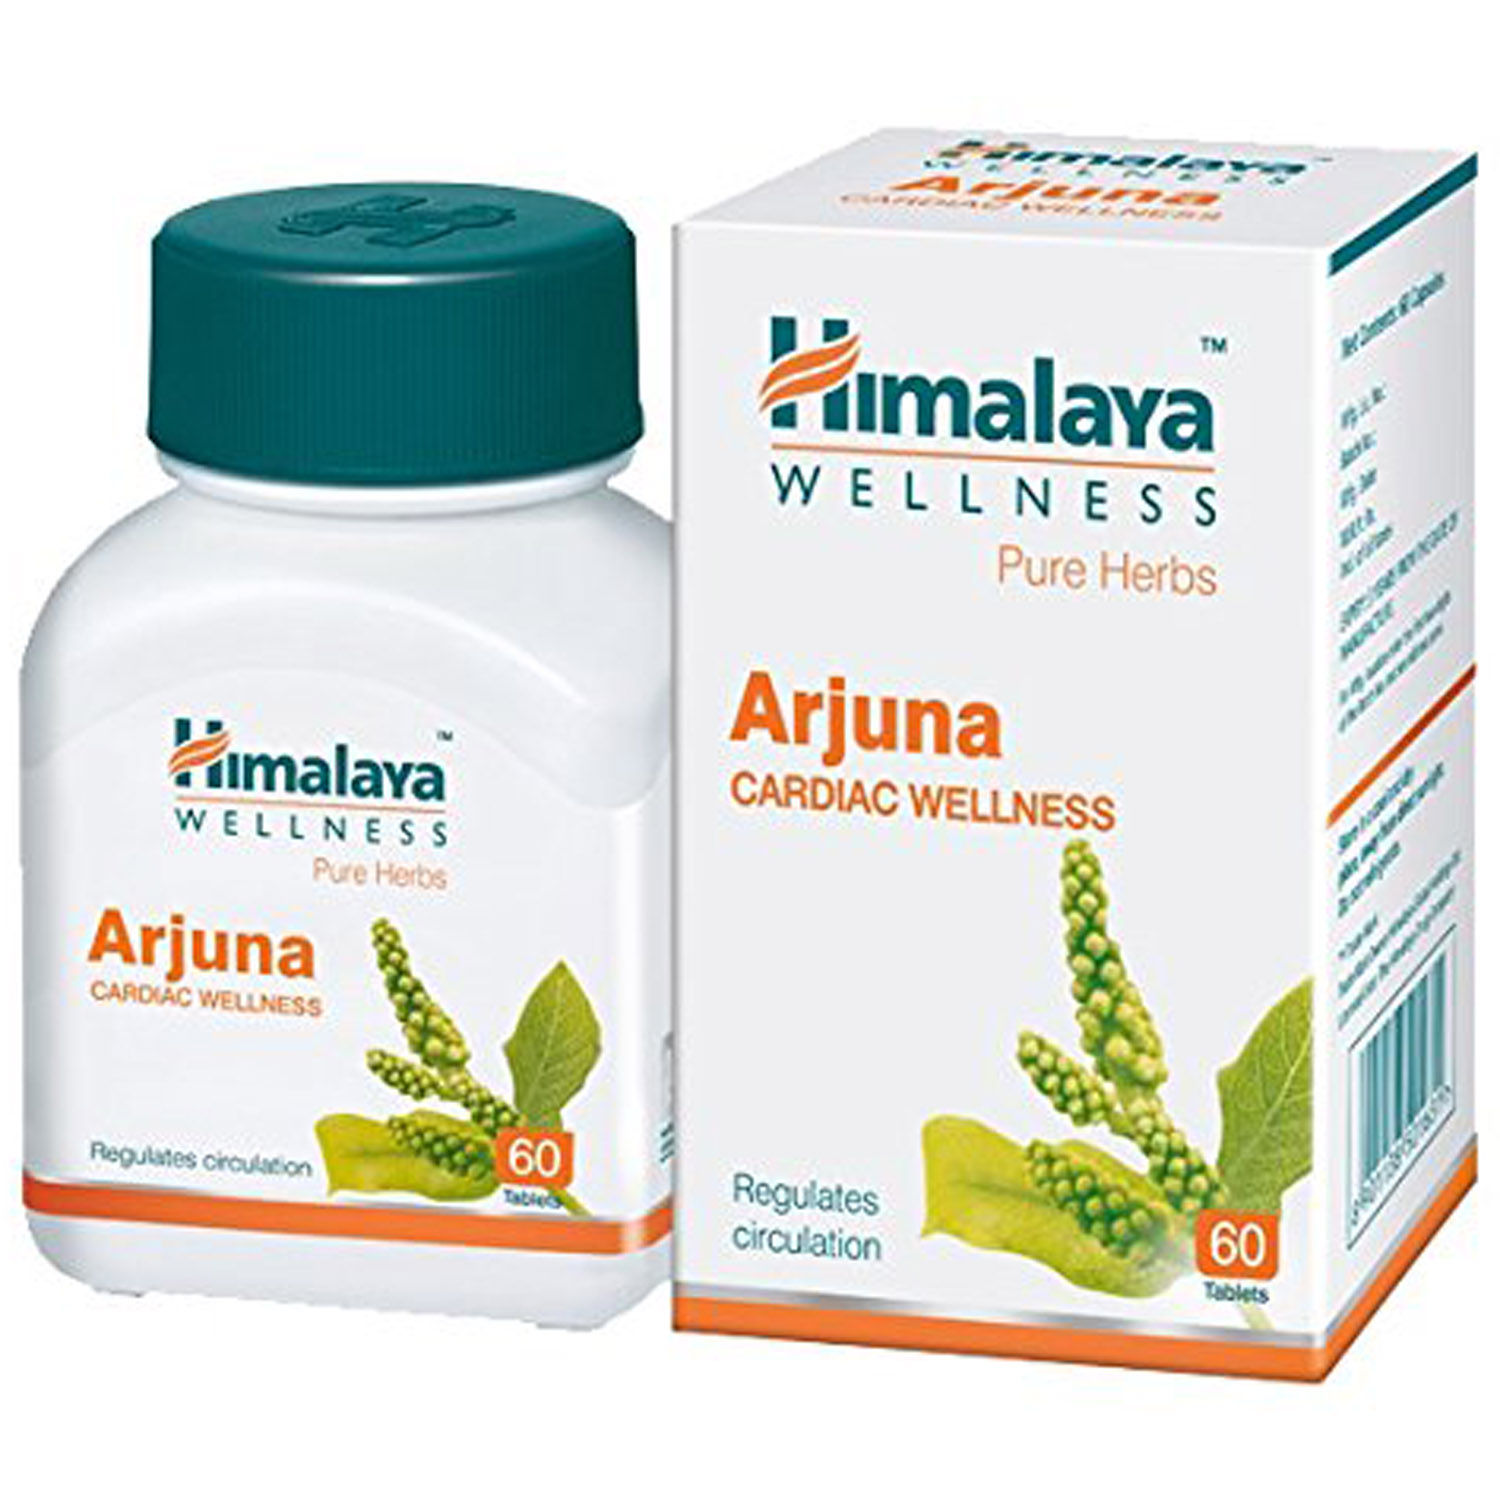 Himalaya Arjuna Cardiac Wellness, 60 Capsules, Pack of 1 